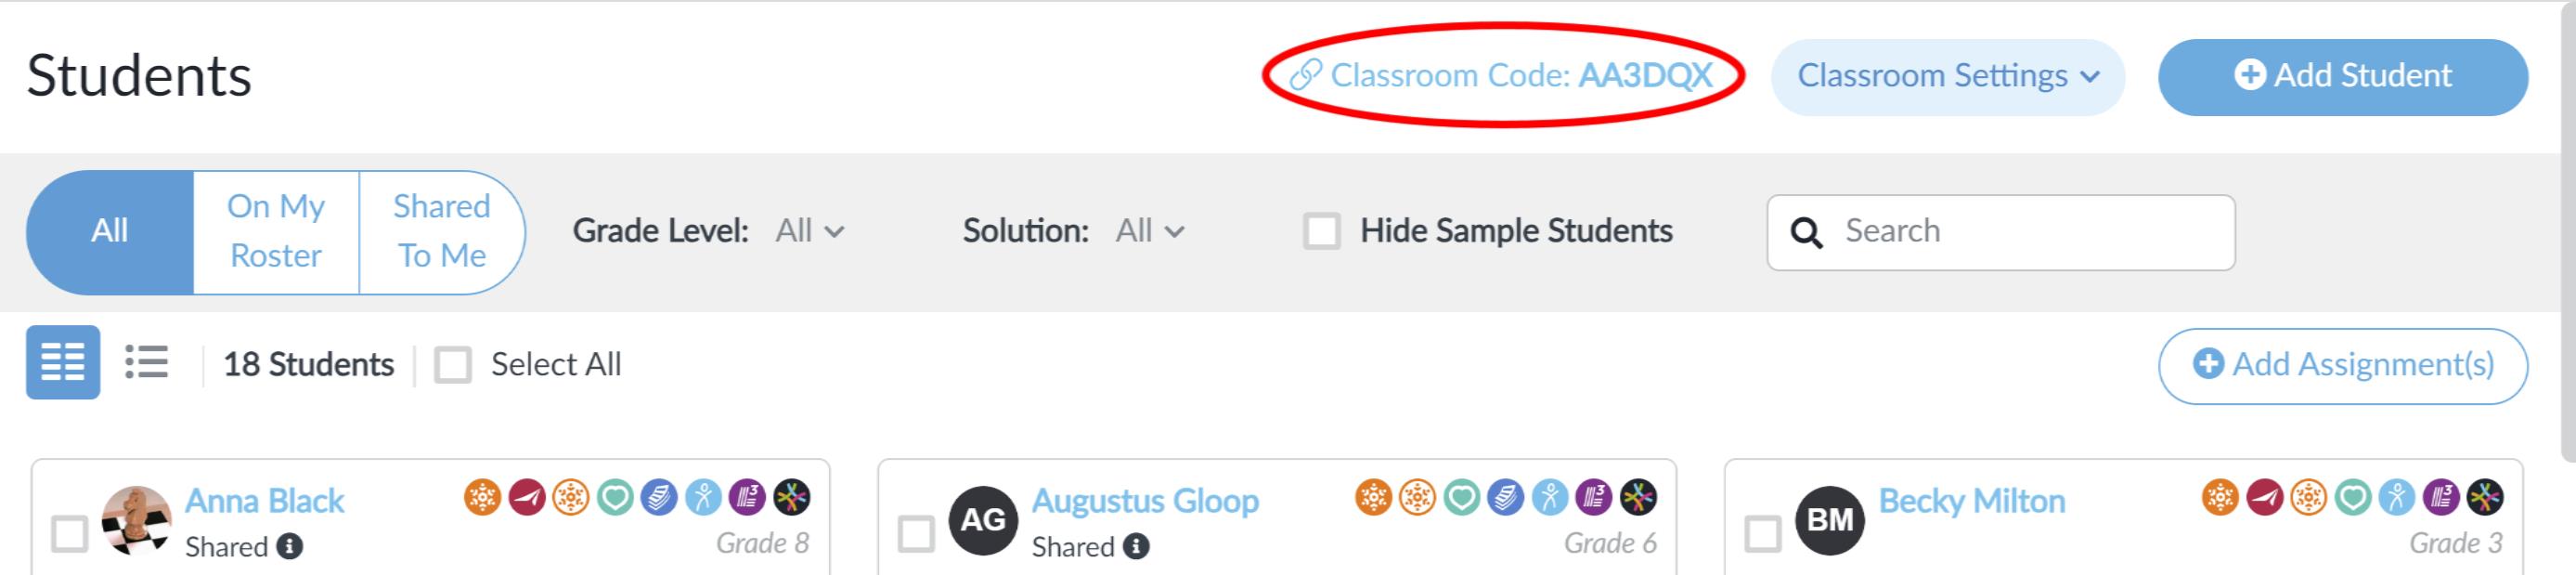 classroom_code_location.jpeg